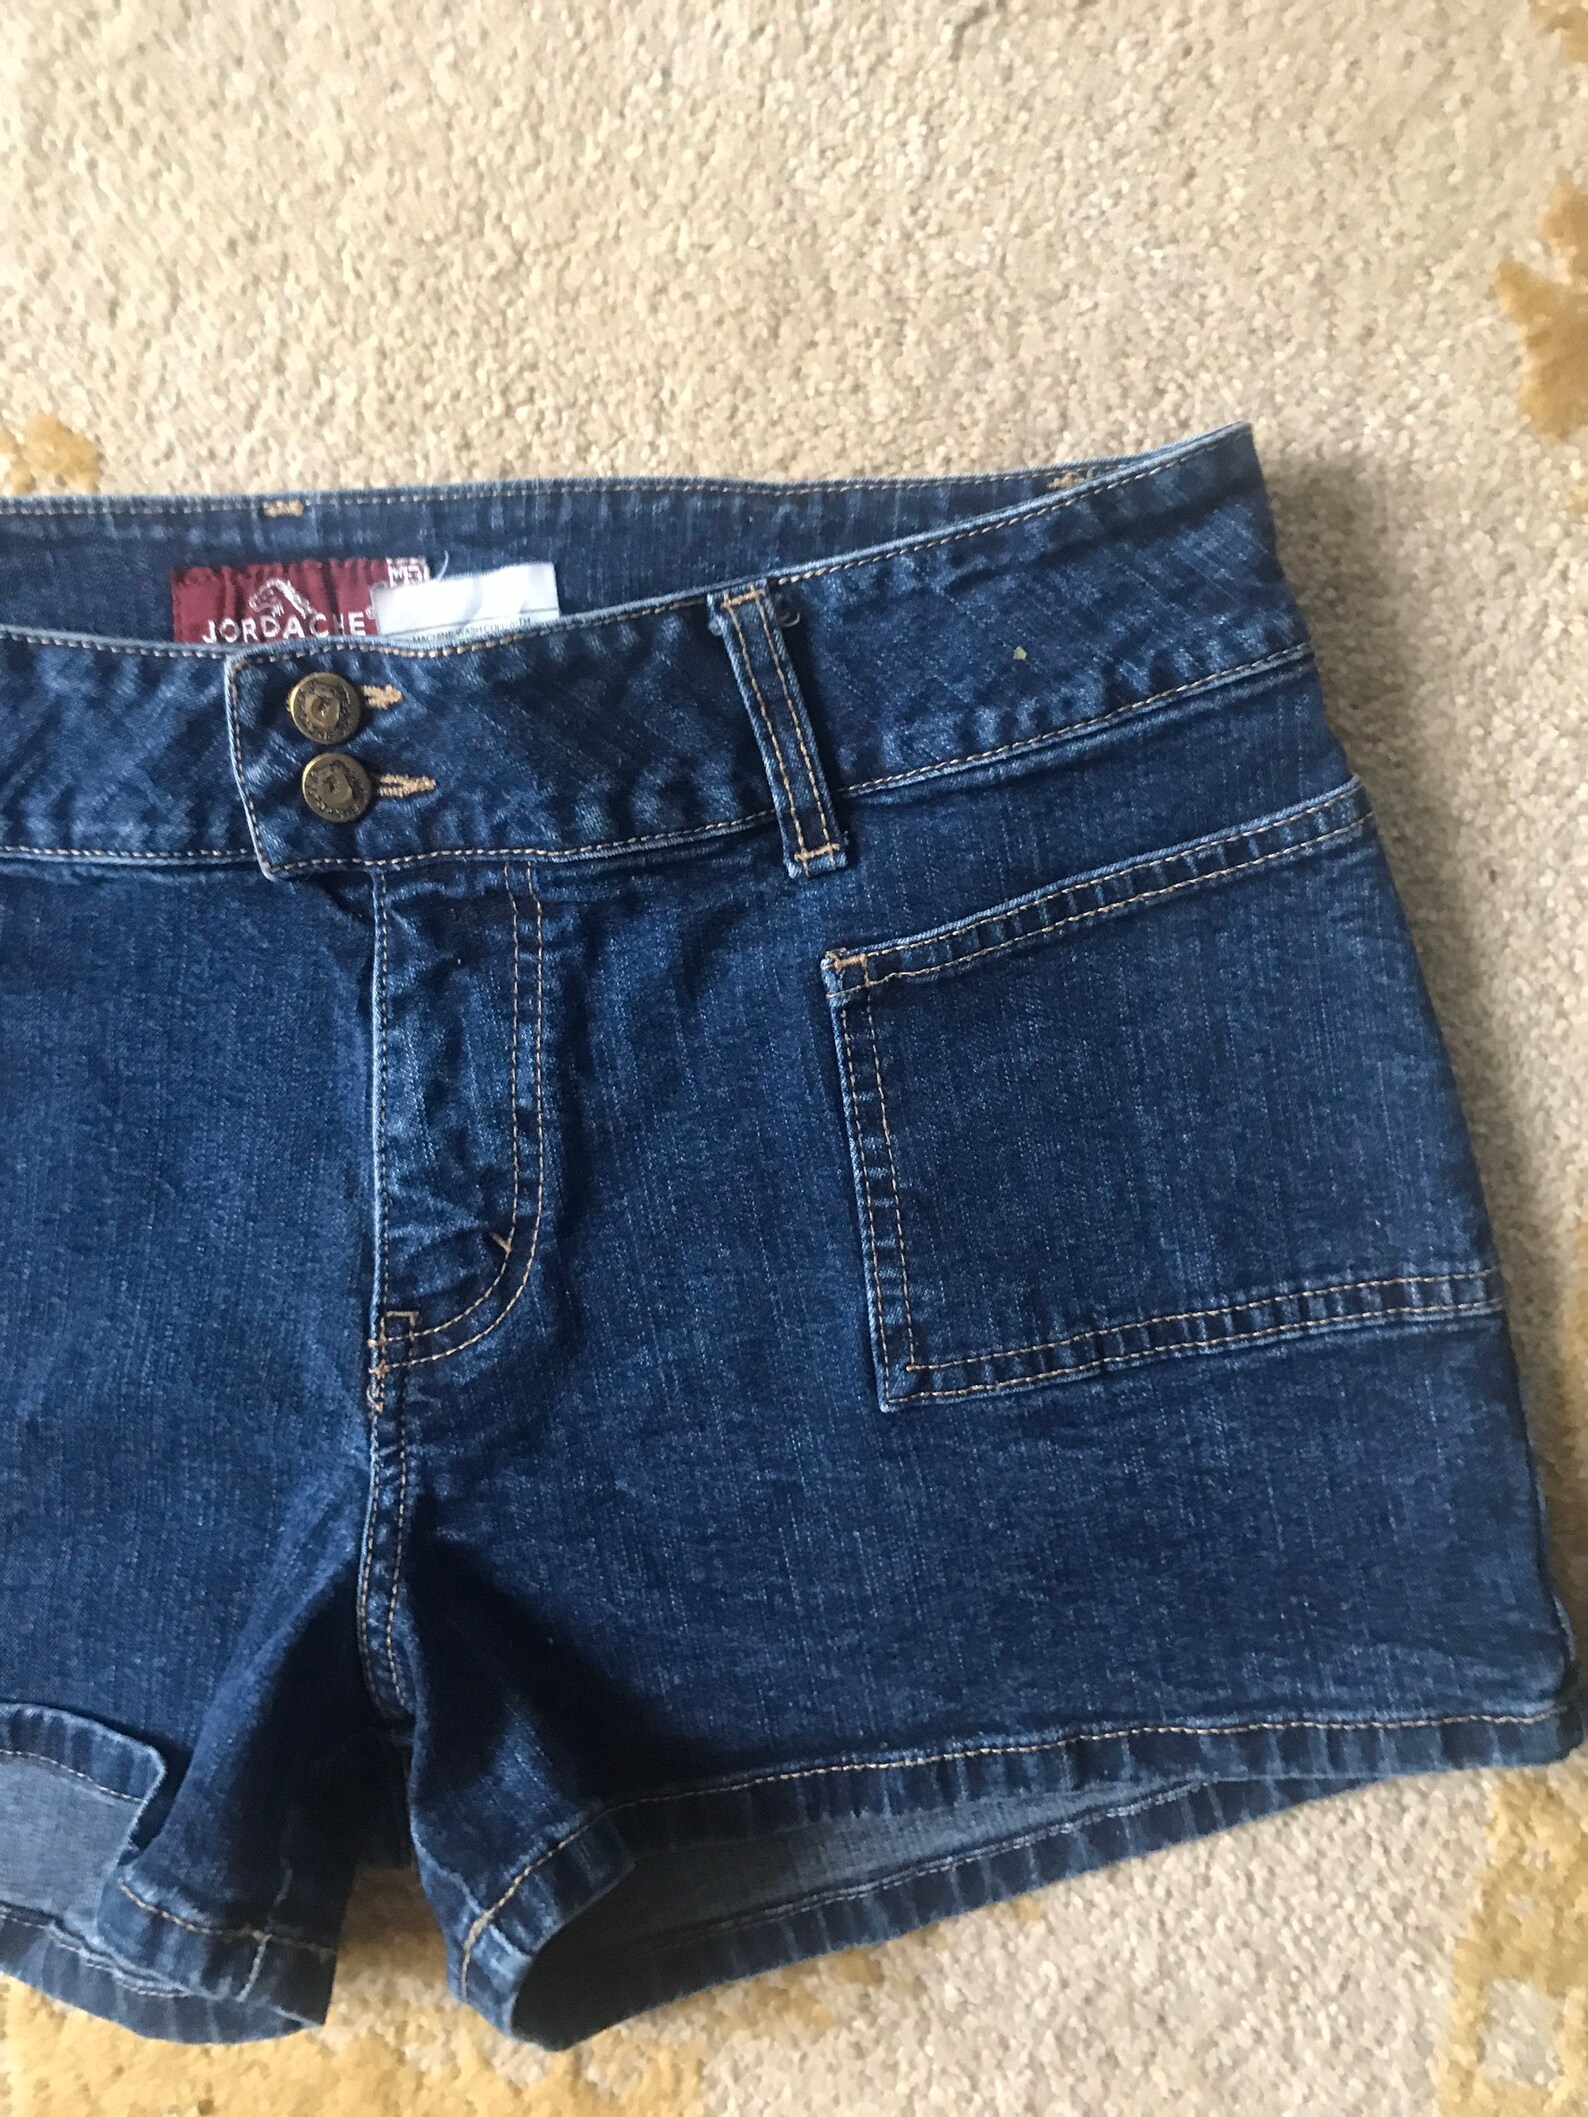 Vintage shorts Y2k 90s back pockets 2000s jeans lazy oaf | Etsy